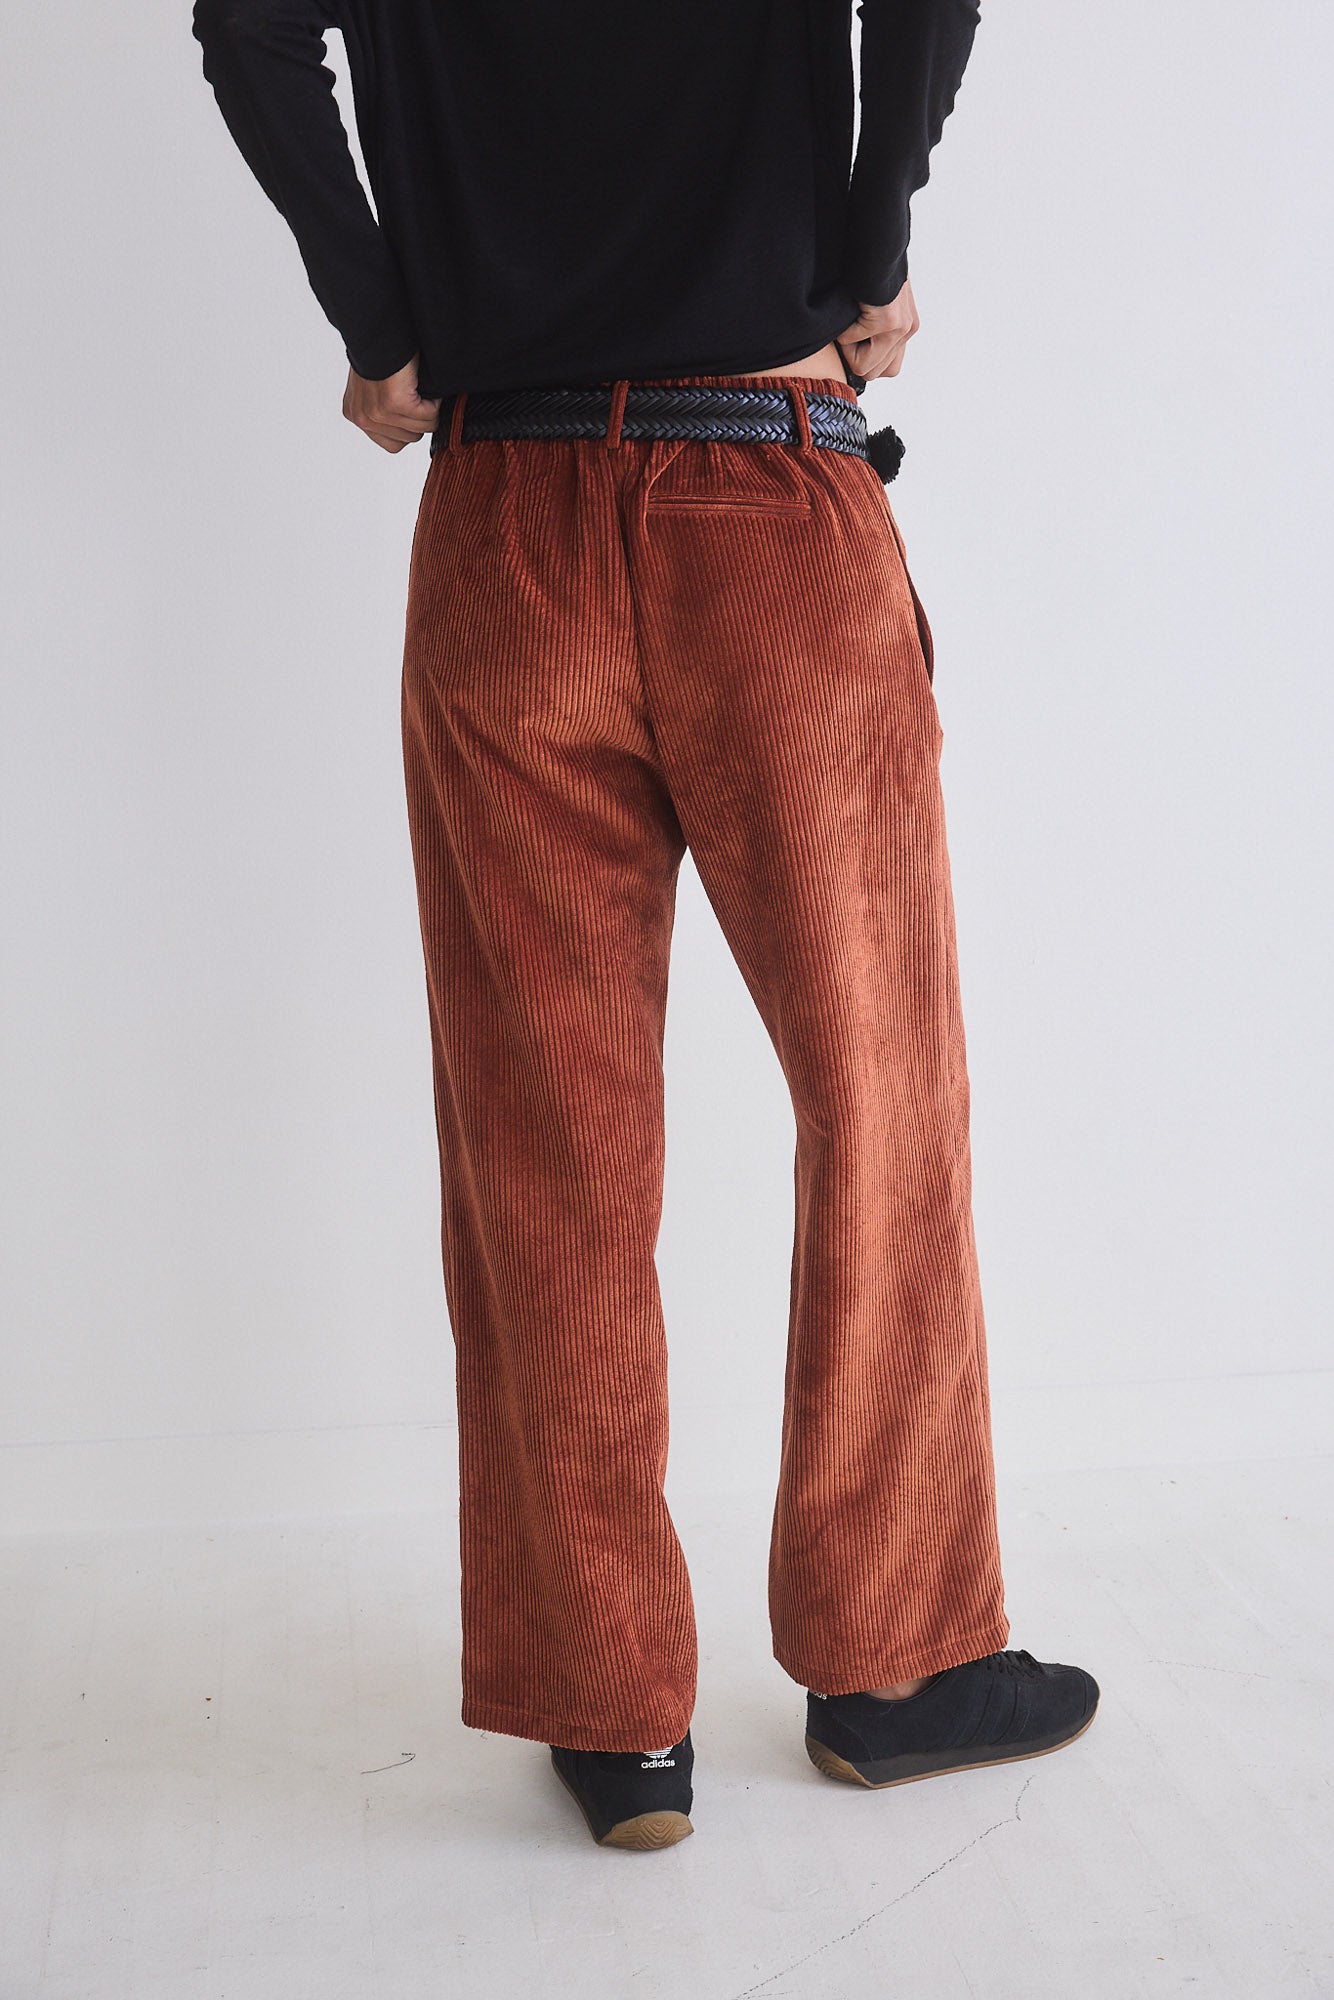 Men Bell Bottom Flares Pants Vintage 60s 70s Business Formal Bootcut Trouser  | eBay